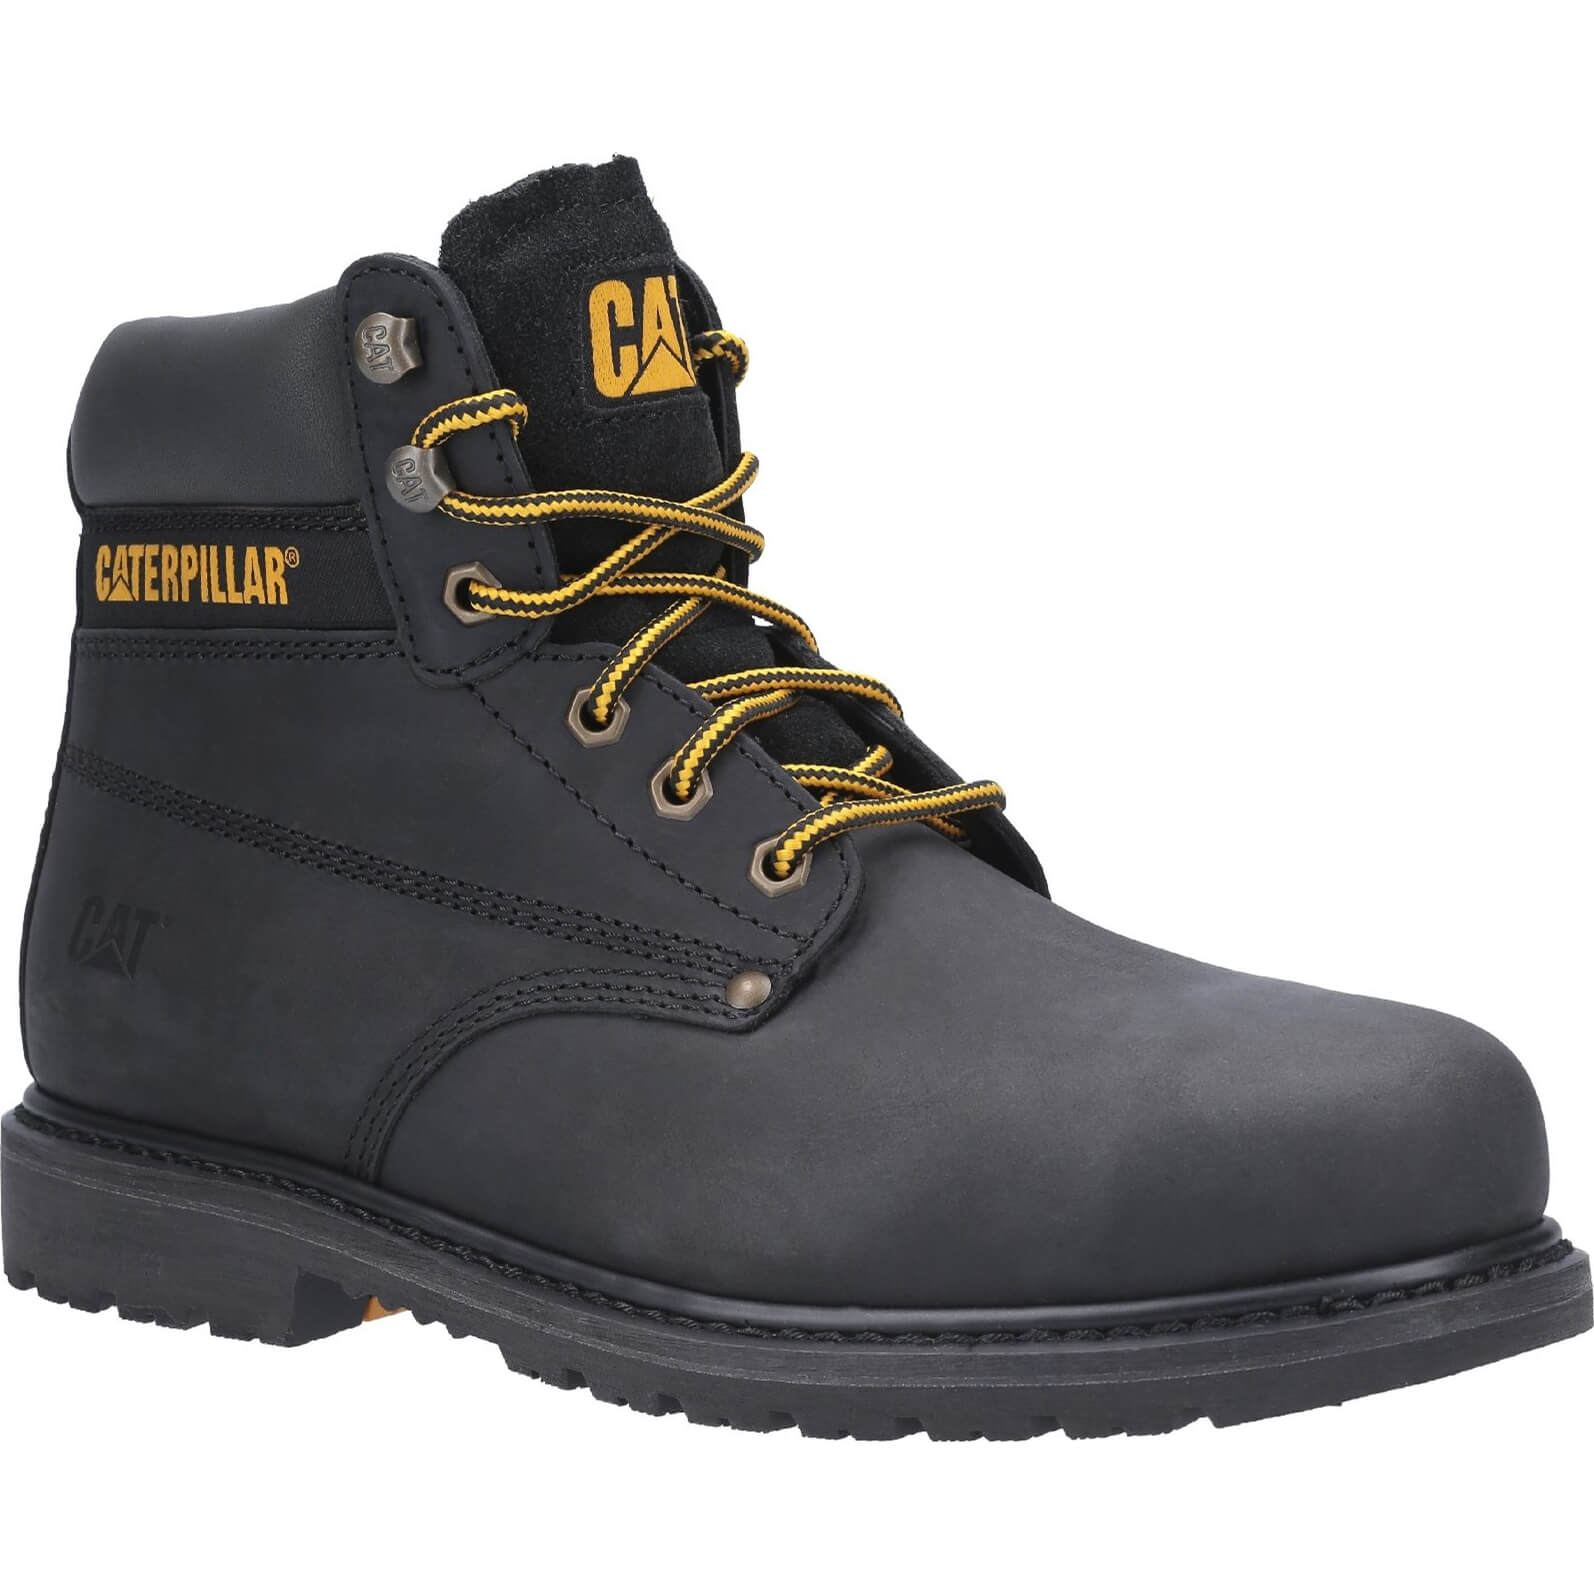 Caterpillar Powerplant GYW Safety Boot Black Size 12